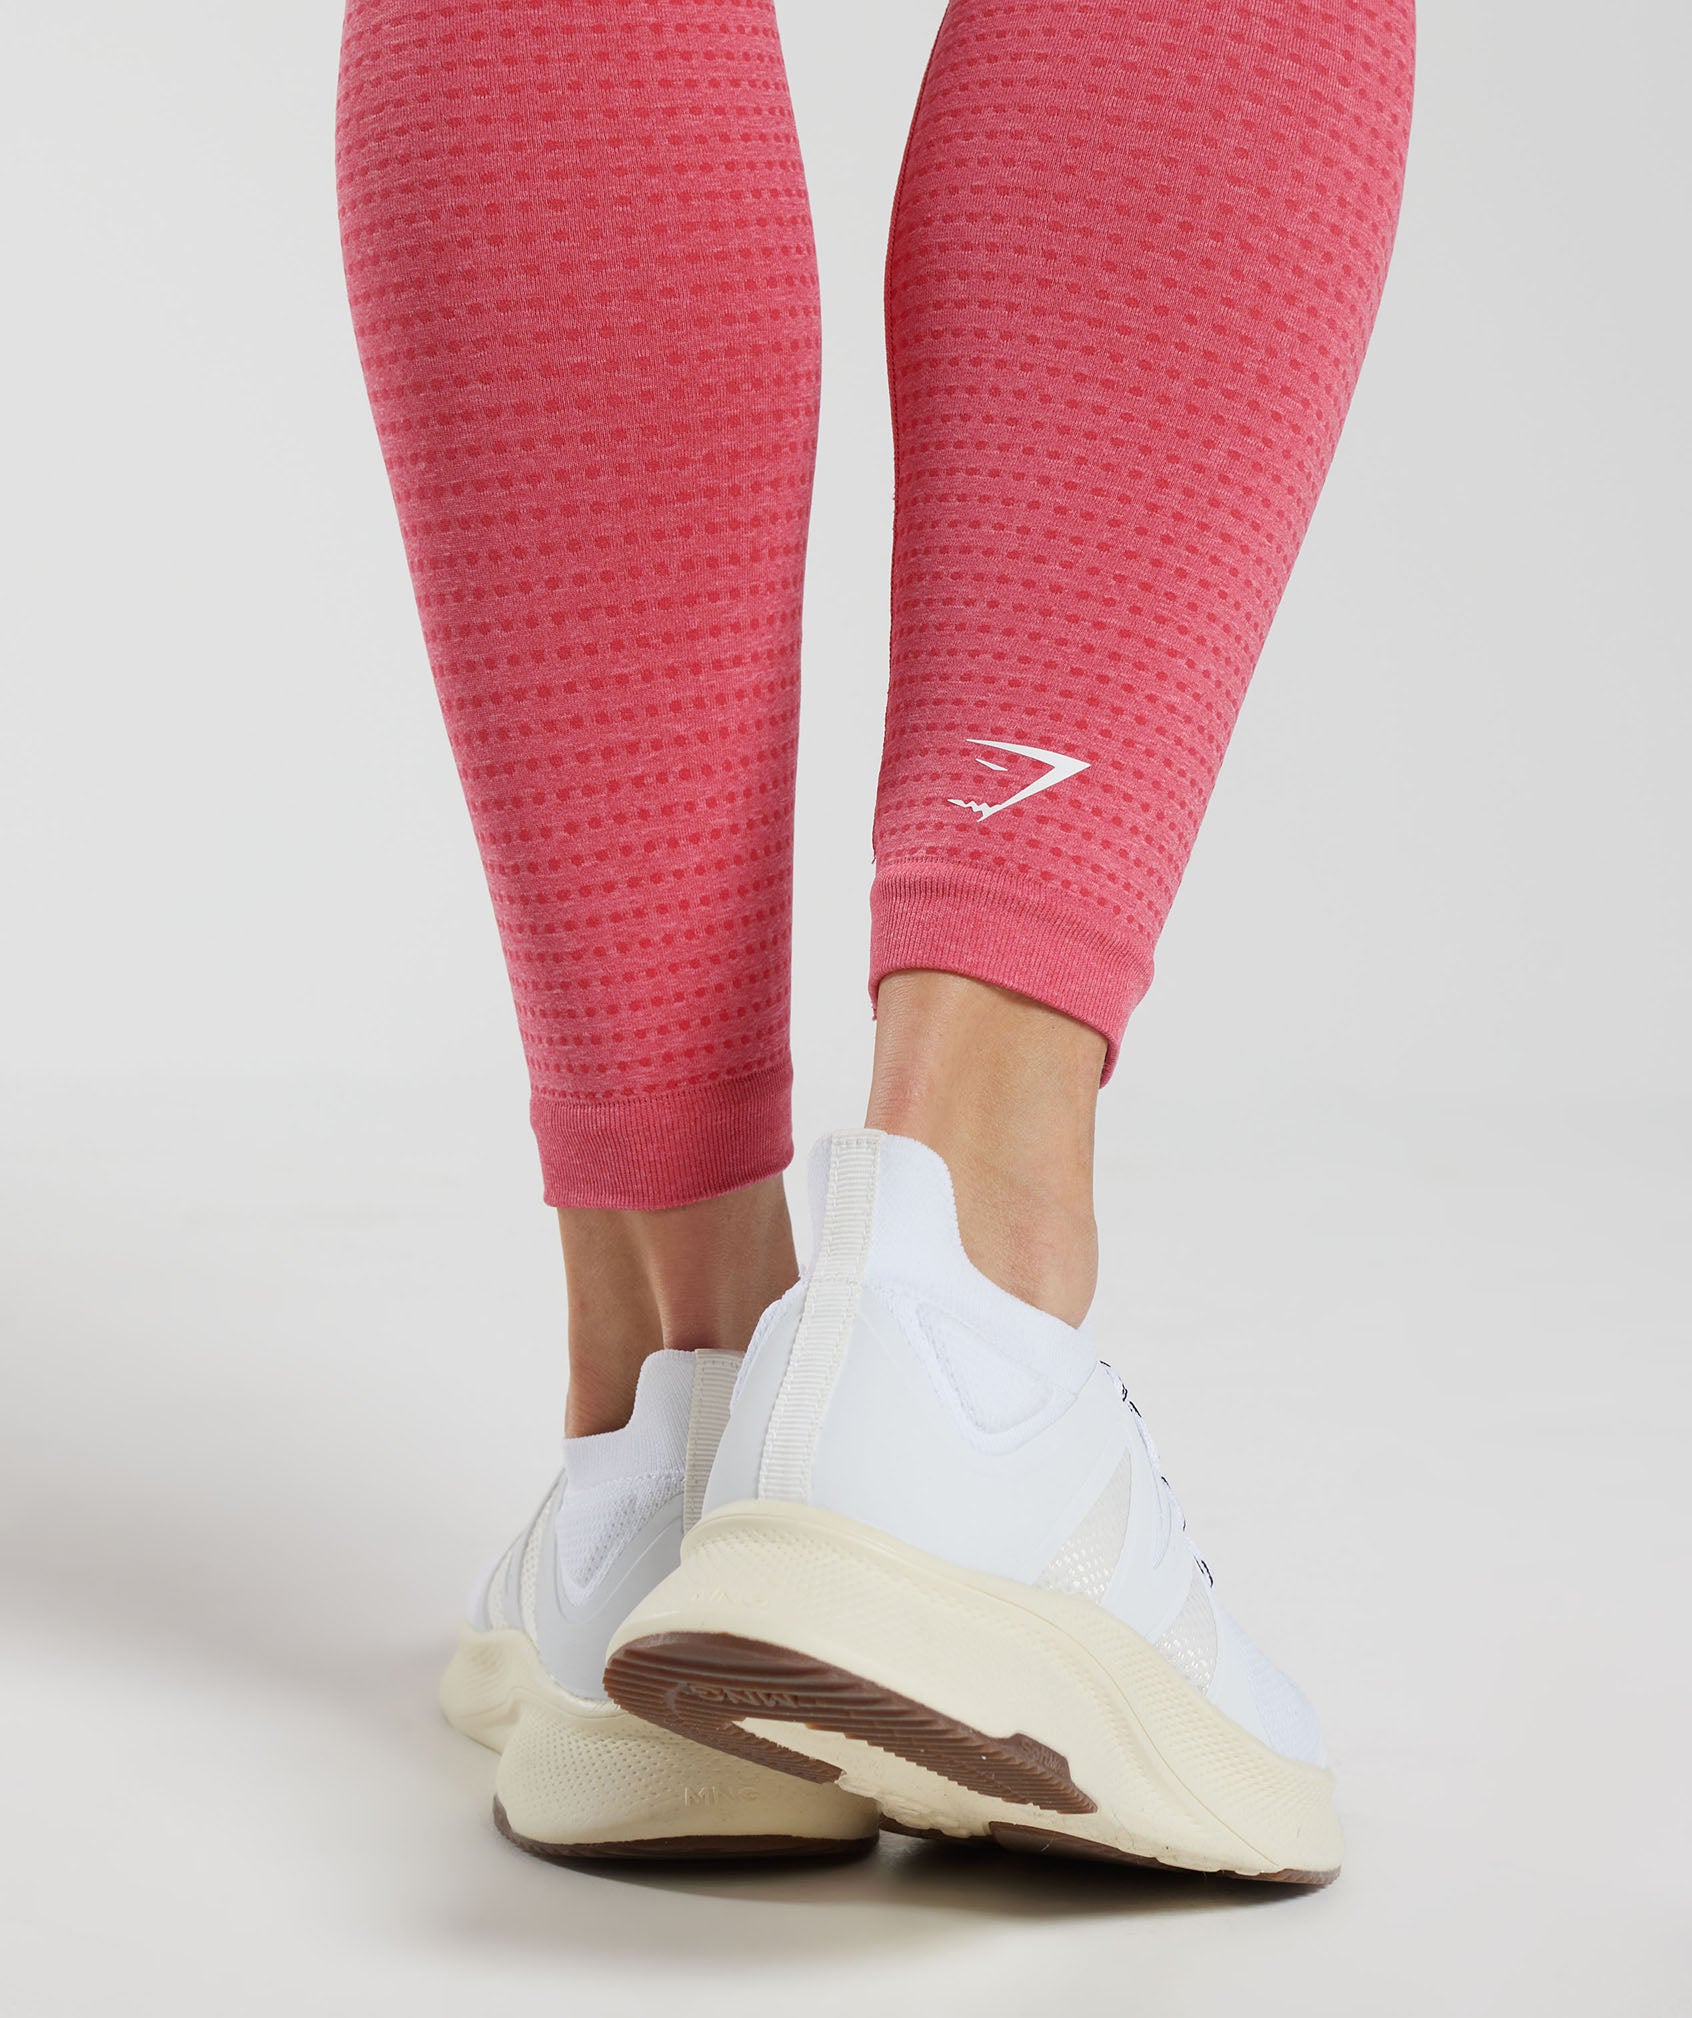 Gymshark Light Pink Vital Seamless Leggings Size L - $35 - From Gracee